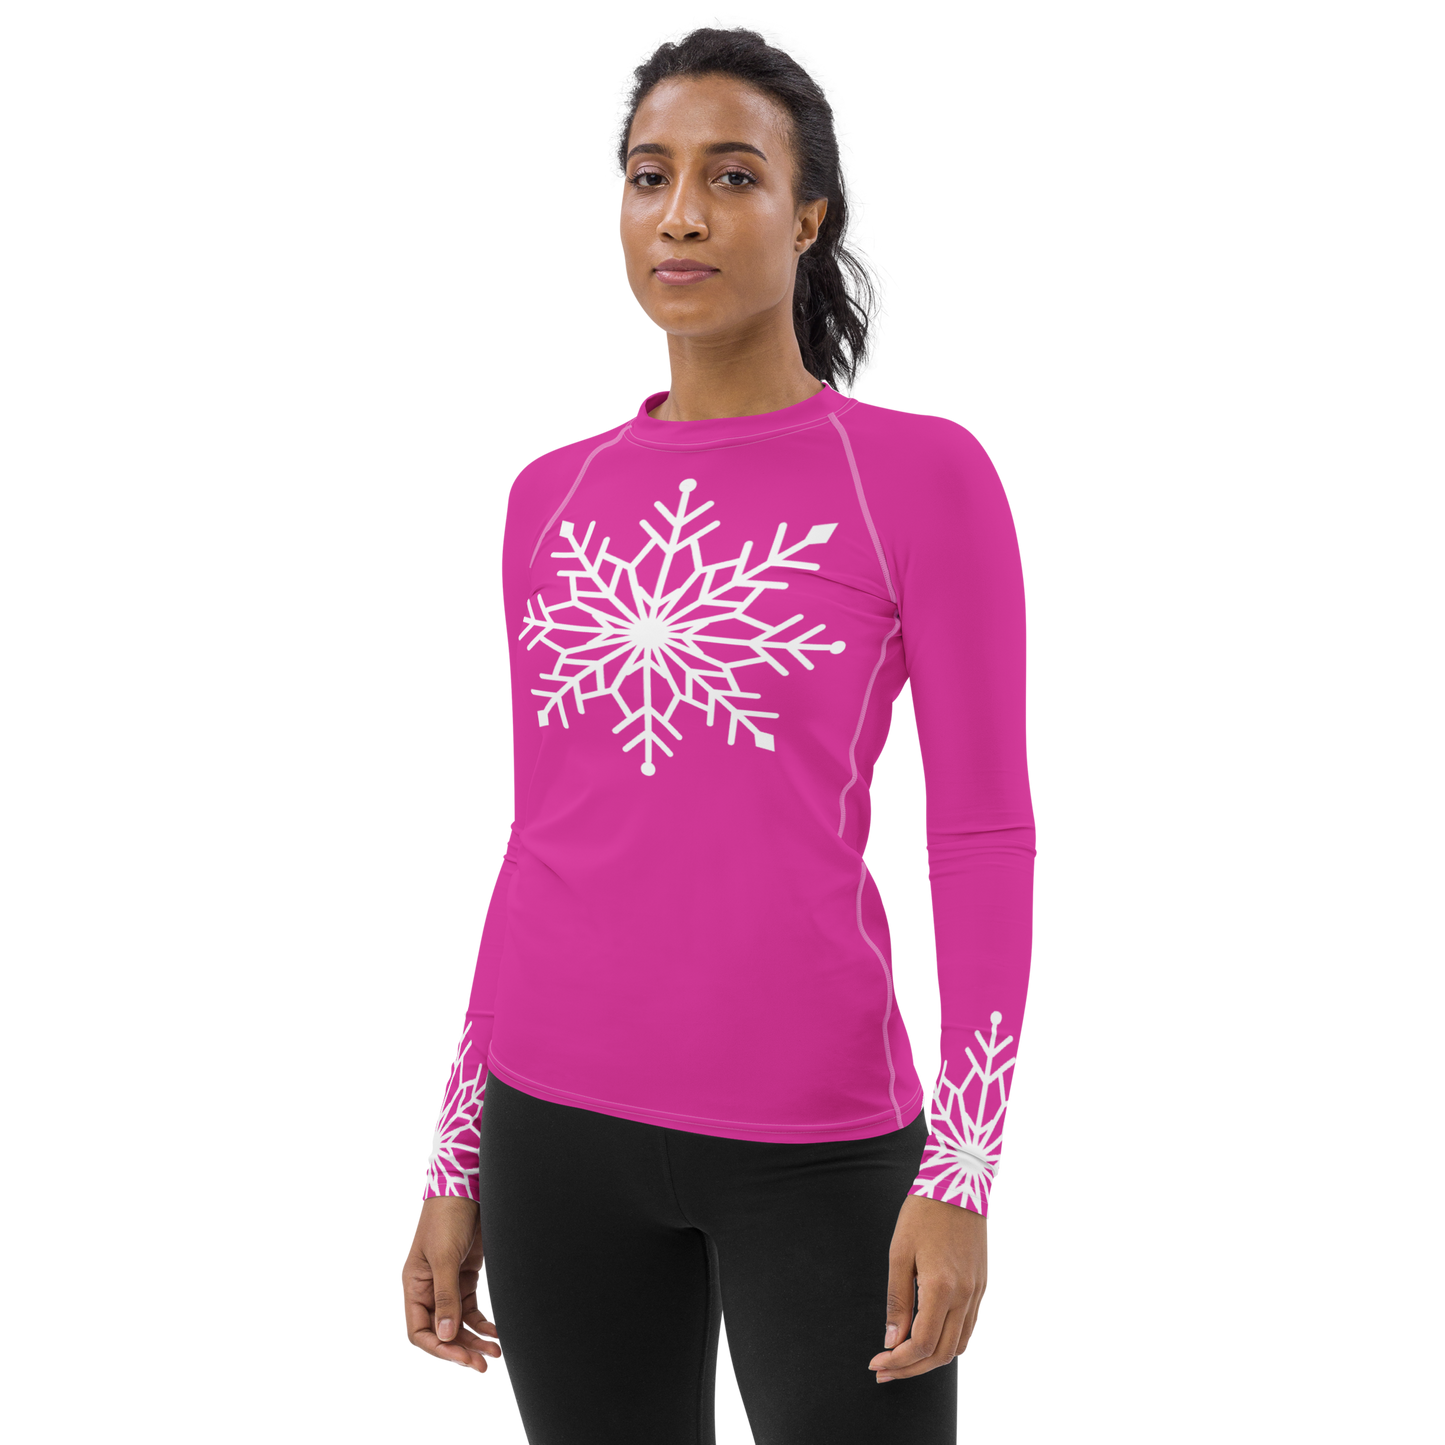 Winter Snowflake Top, White Snowflake on Hot Pink Women's Rash Guard, Holiday Top